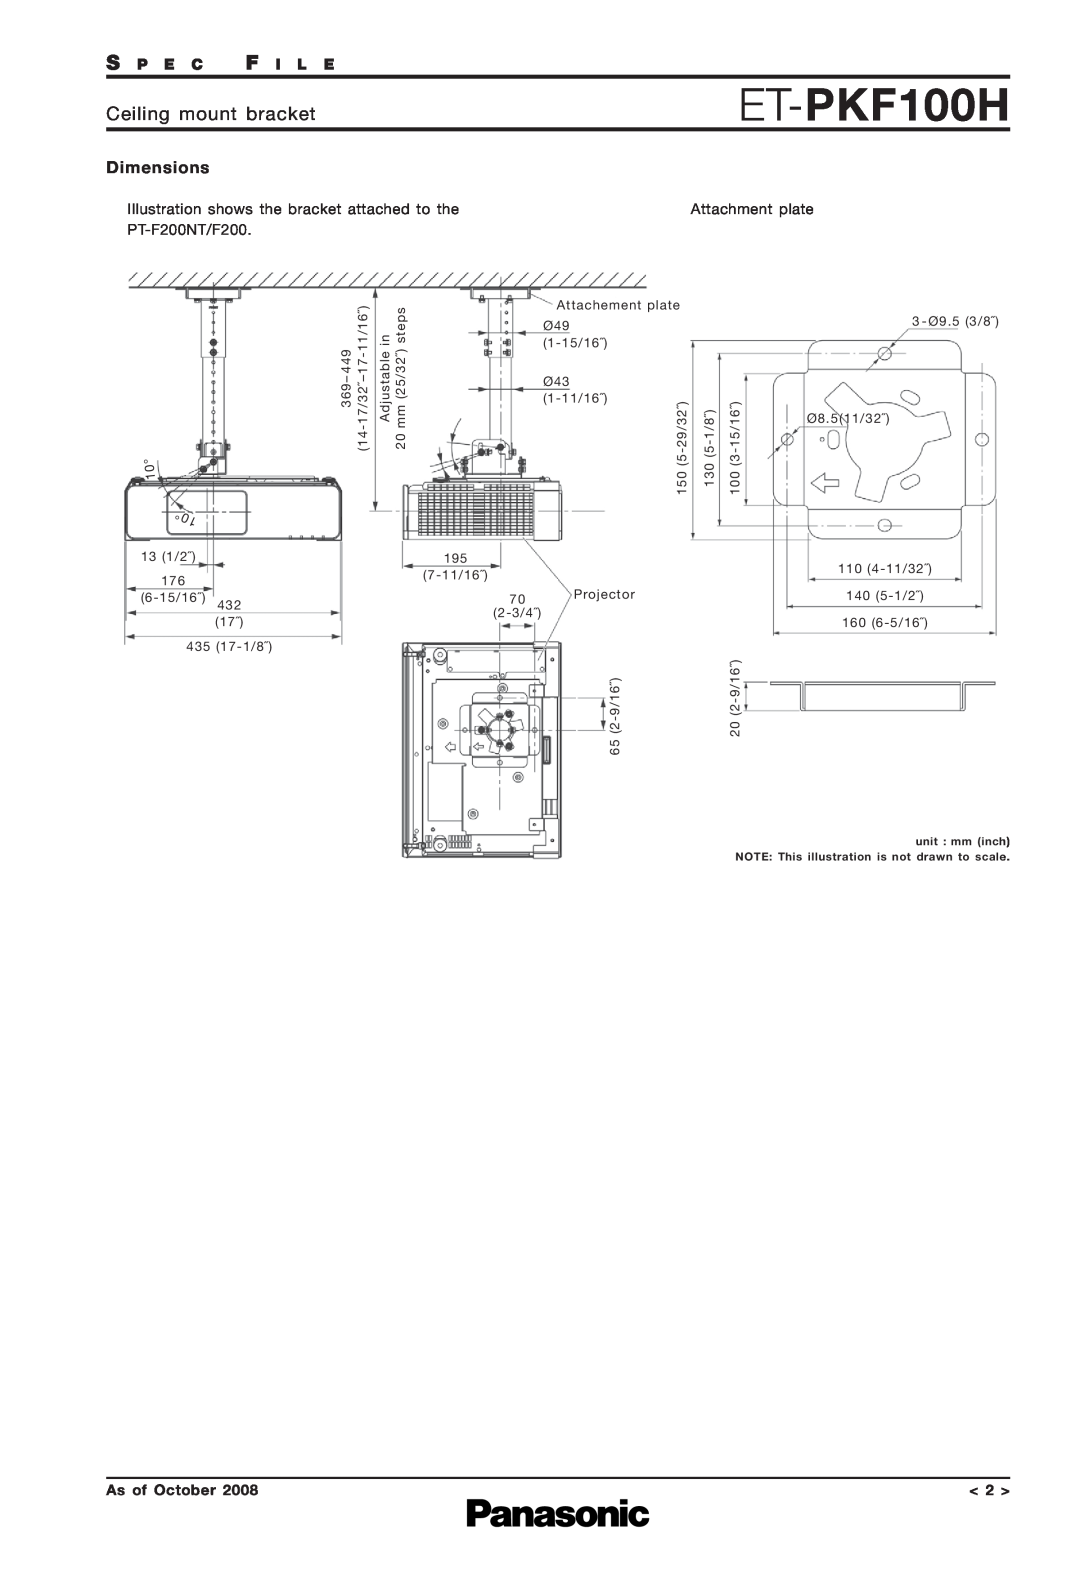 Panasonic ET-PKF100H dimensions Ceiling mount bracket, Dimensions, S P E C F I L E, As of October 